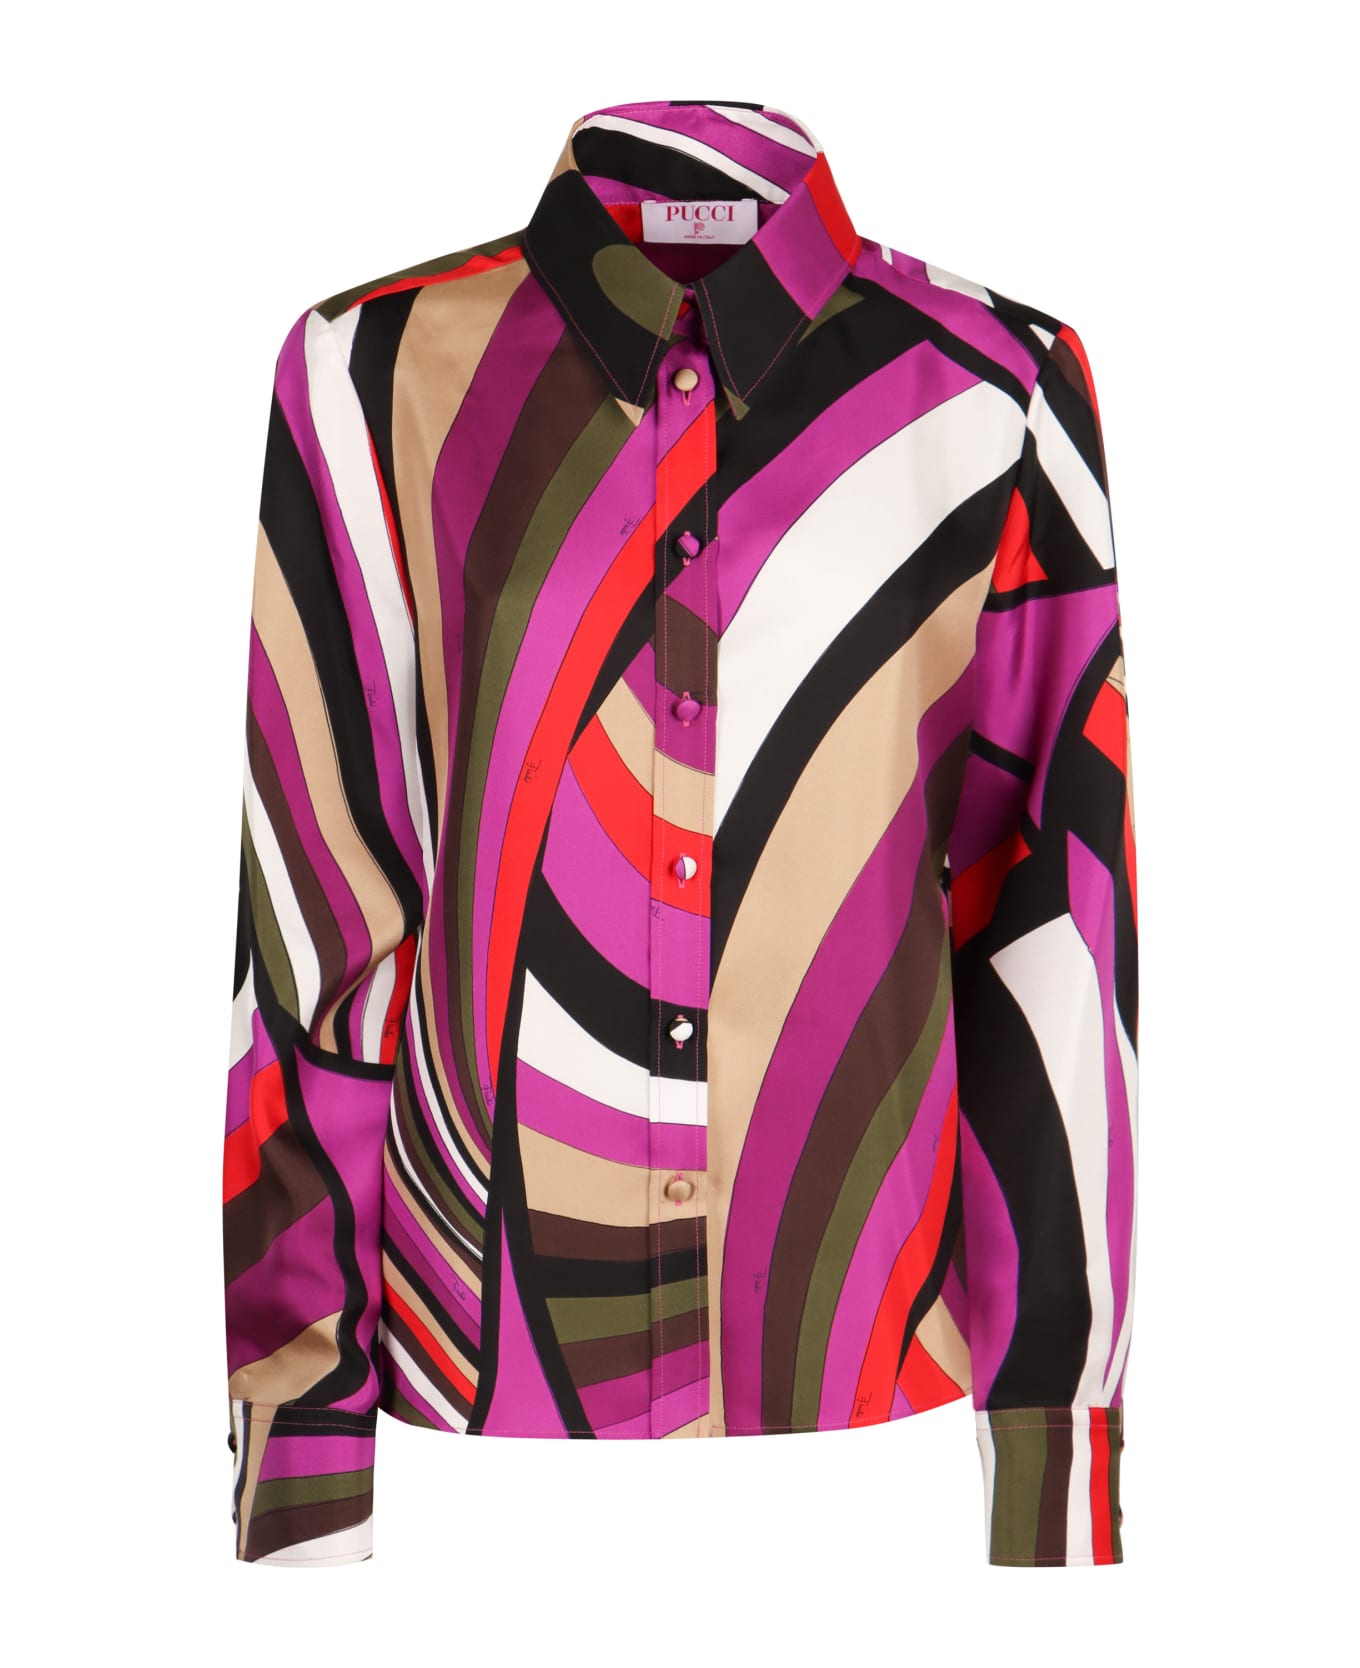 Pucci Printed Silk Shirt - PURPLE/RED